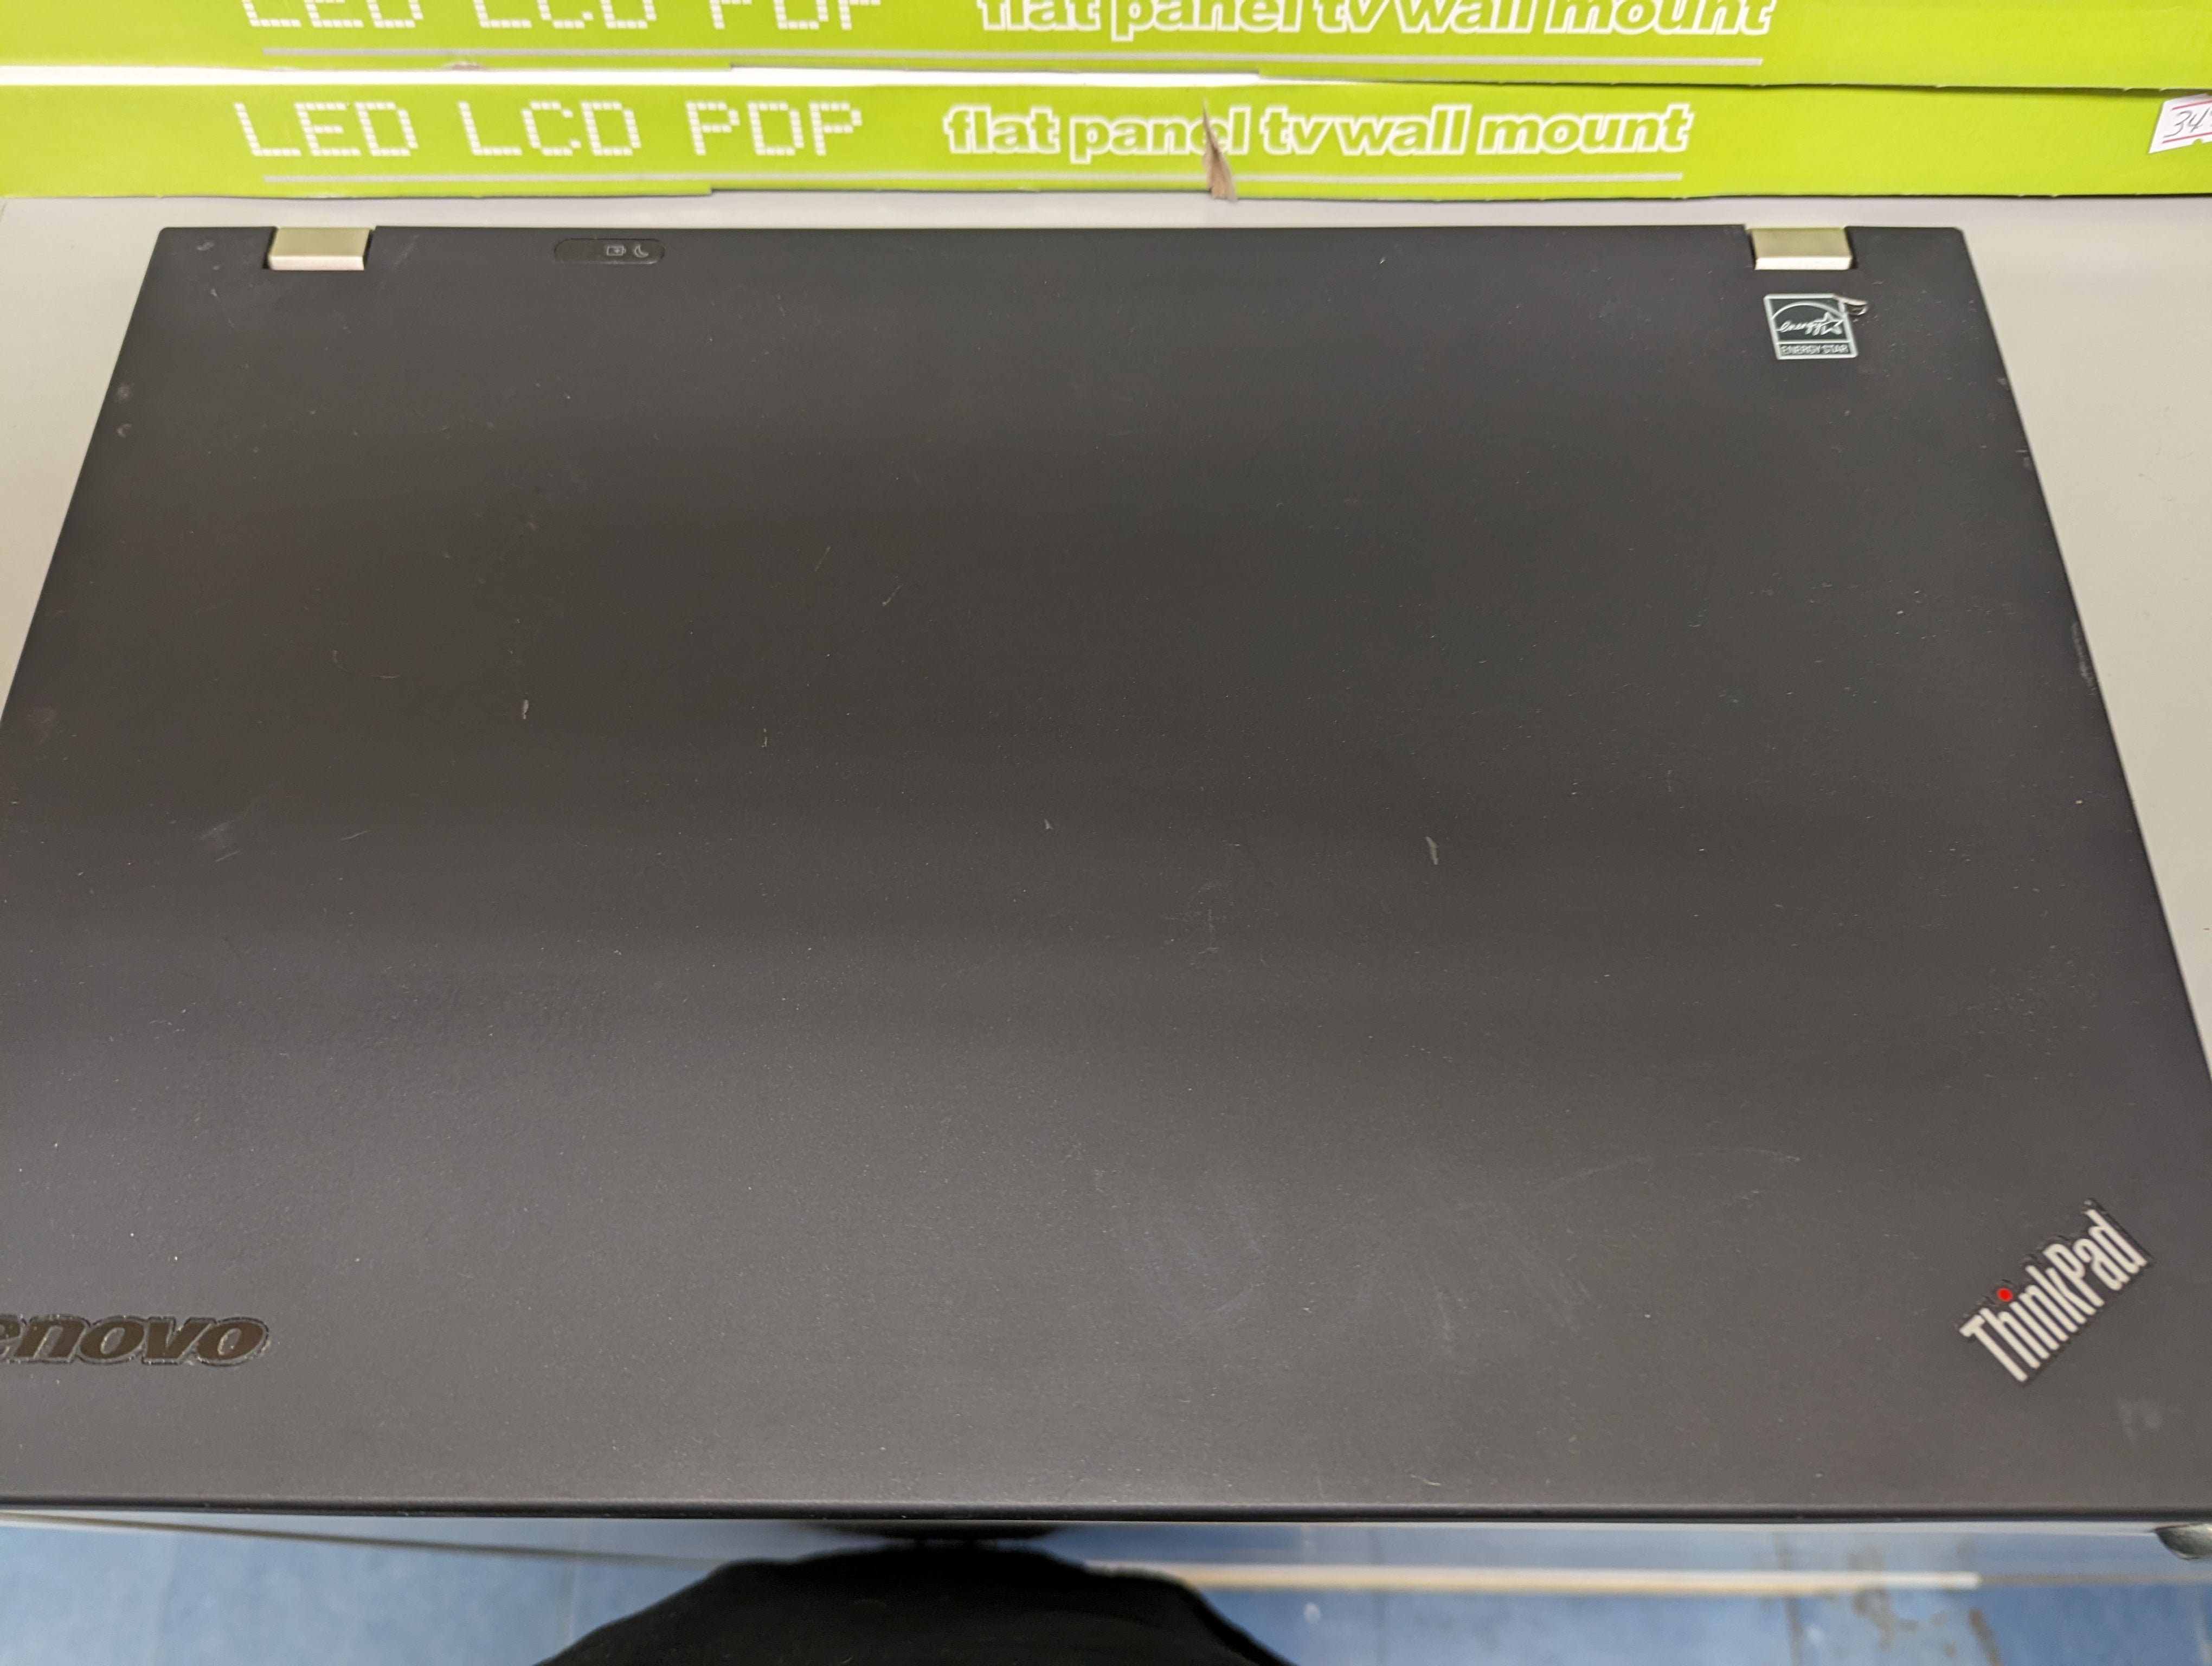 Lenovo ThinkPad T530 remis à neuf.